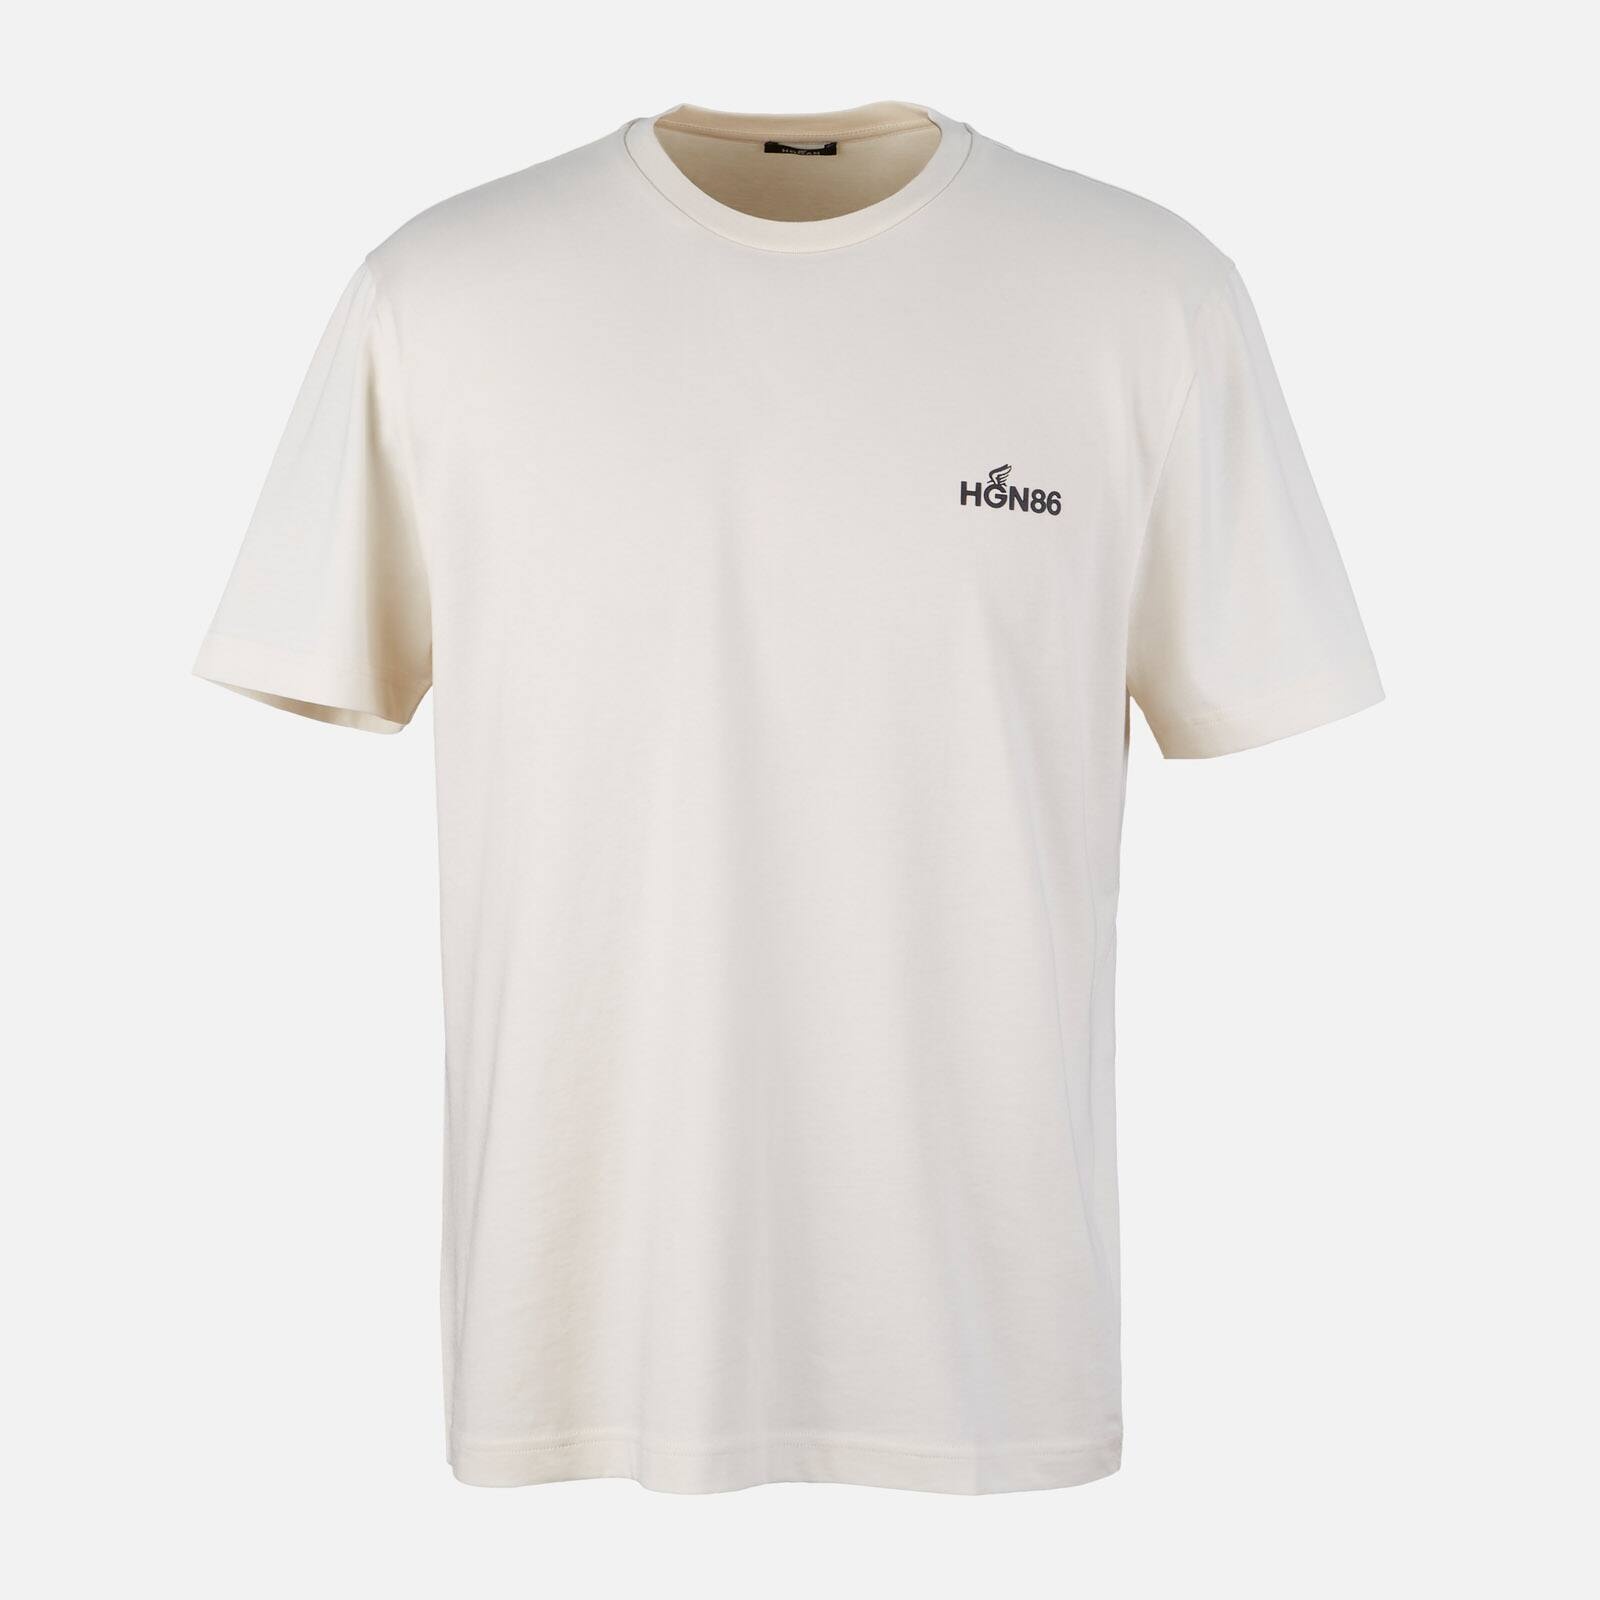 T-shirt in Denim White - 1